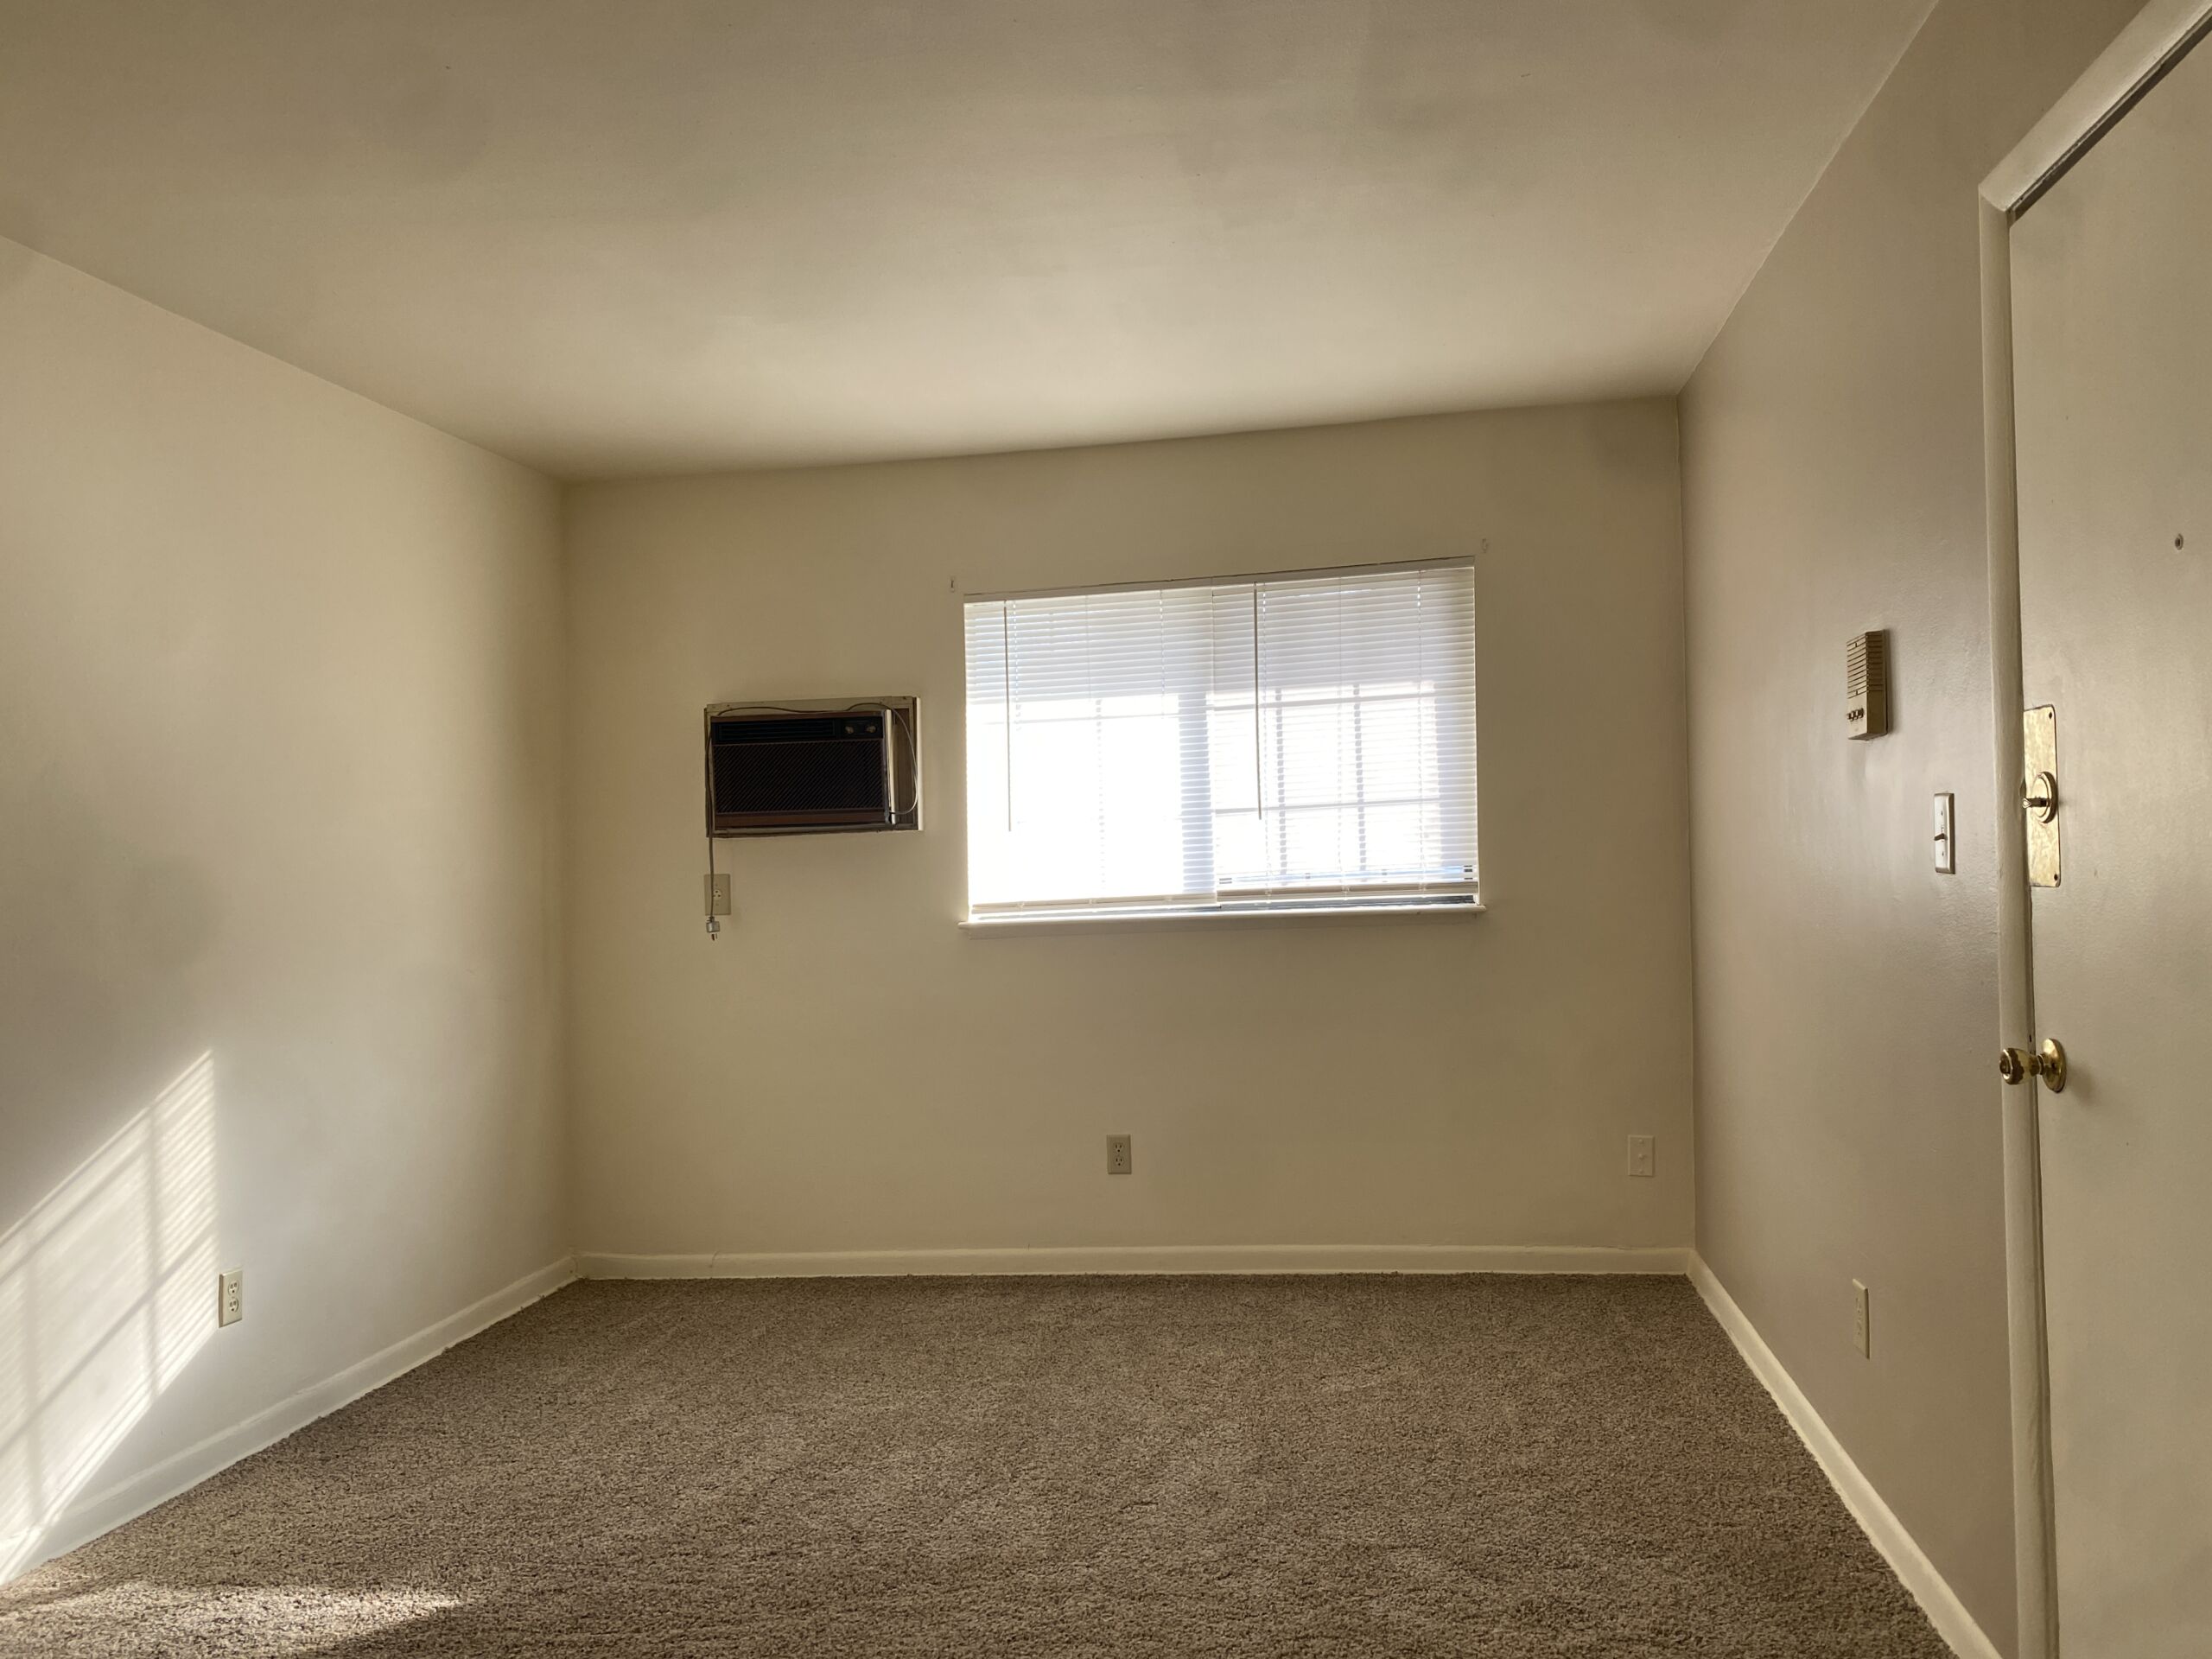 Single Unit Apartment living in Franklinton